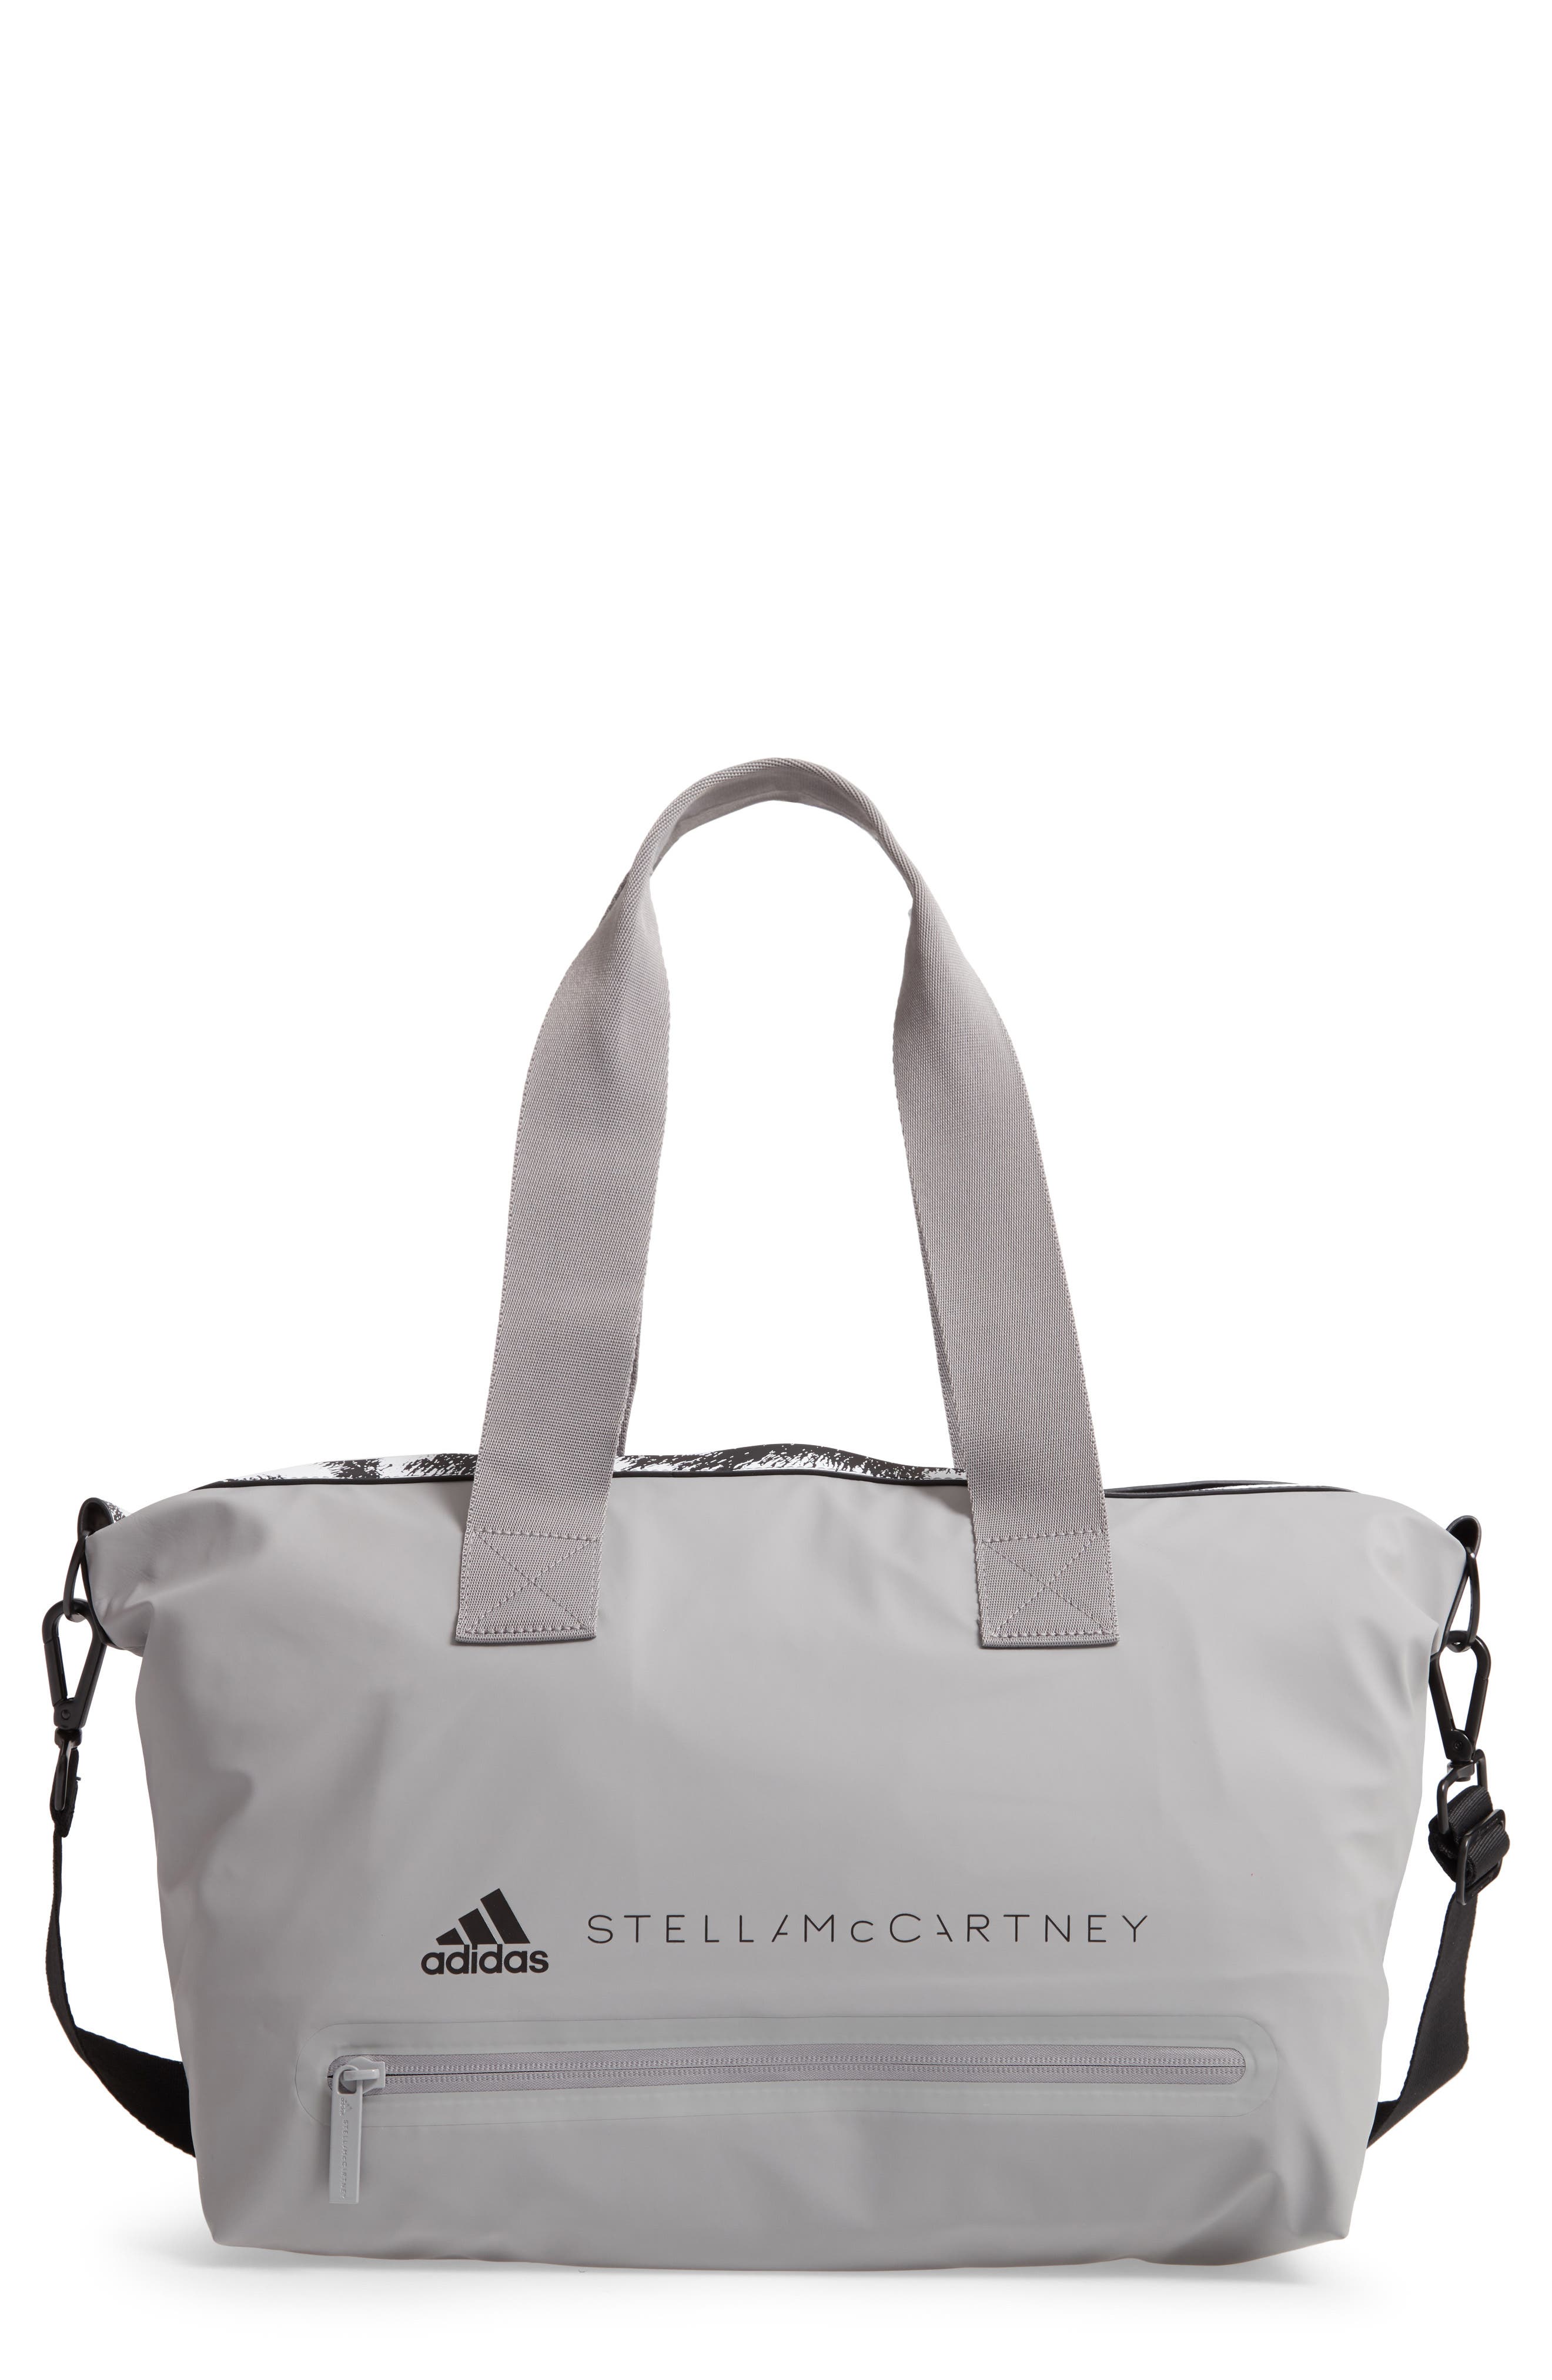 adidas by stella mccartney studio bag tote